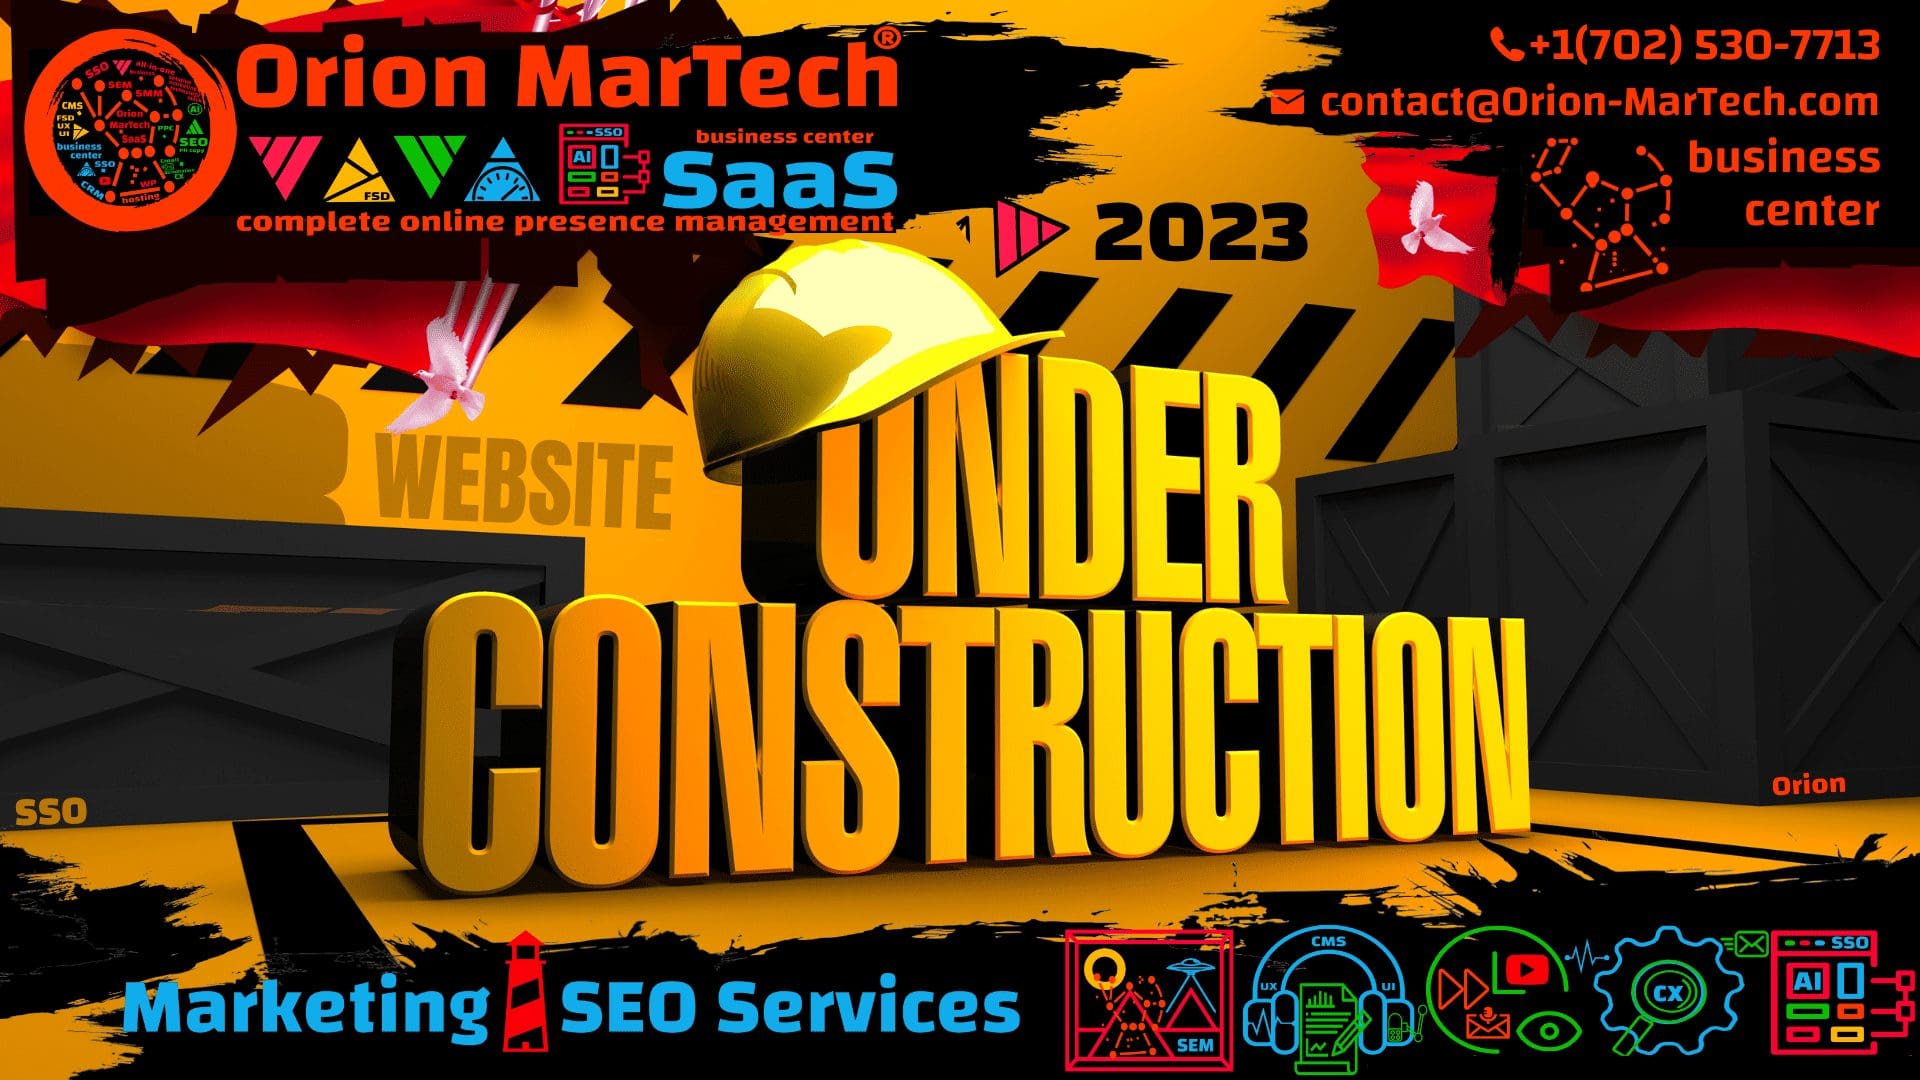 Orion MarTech Under Construction Page 2023